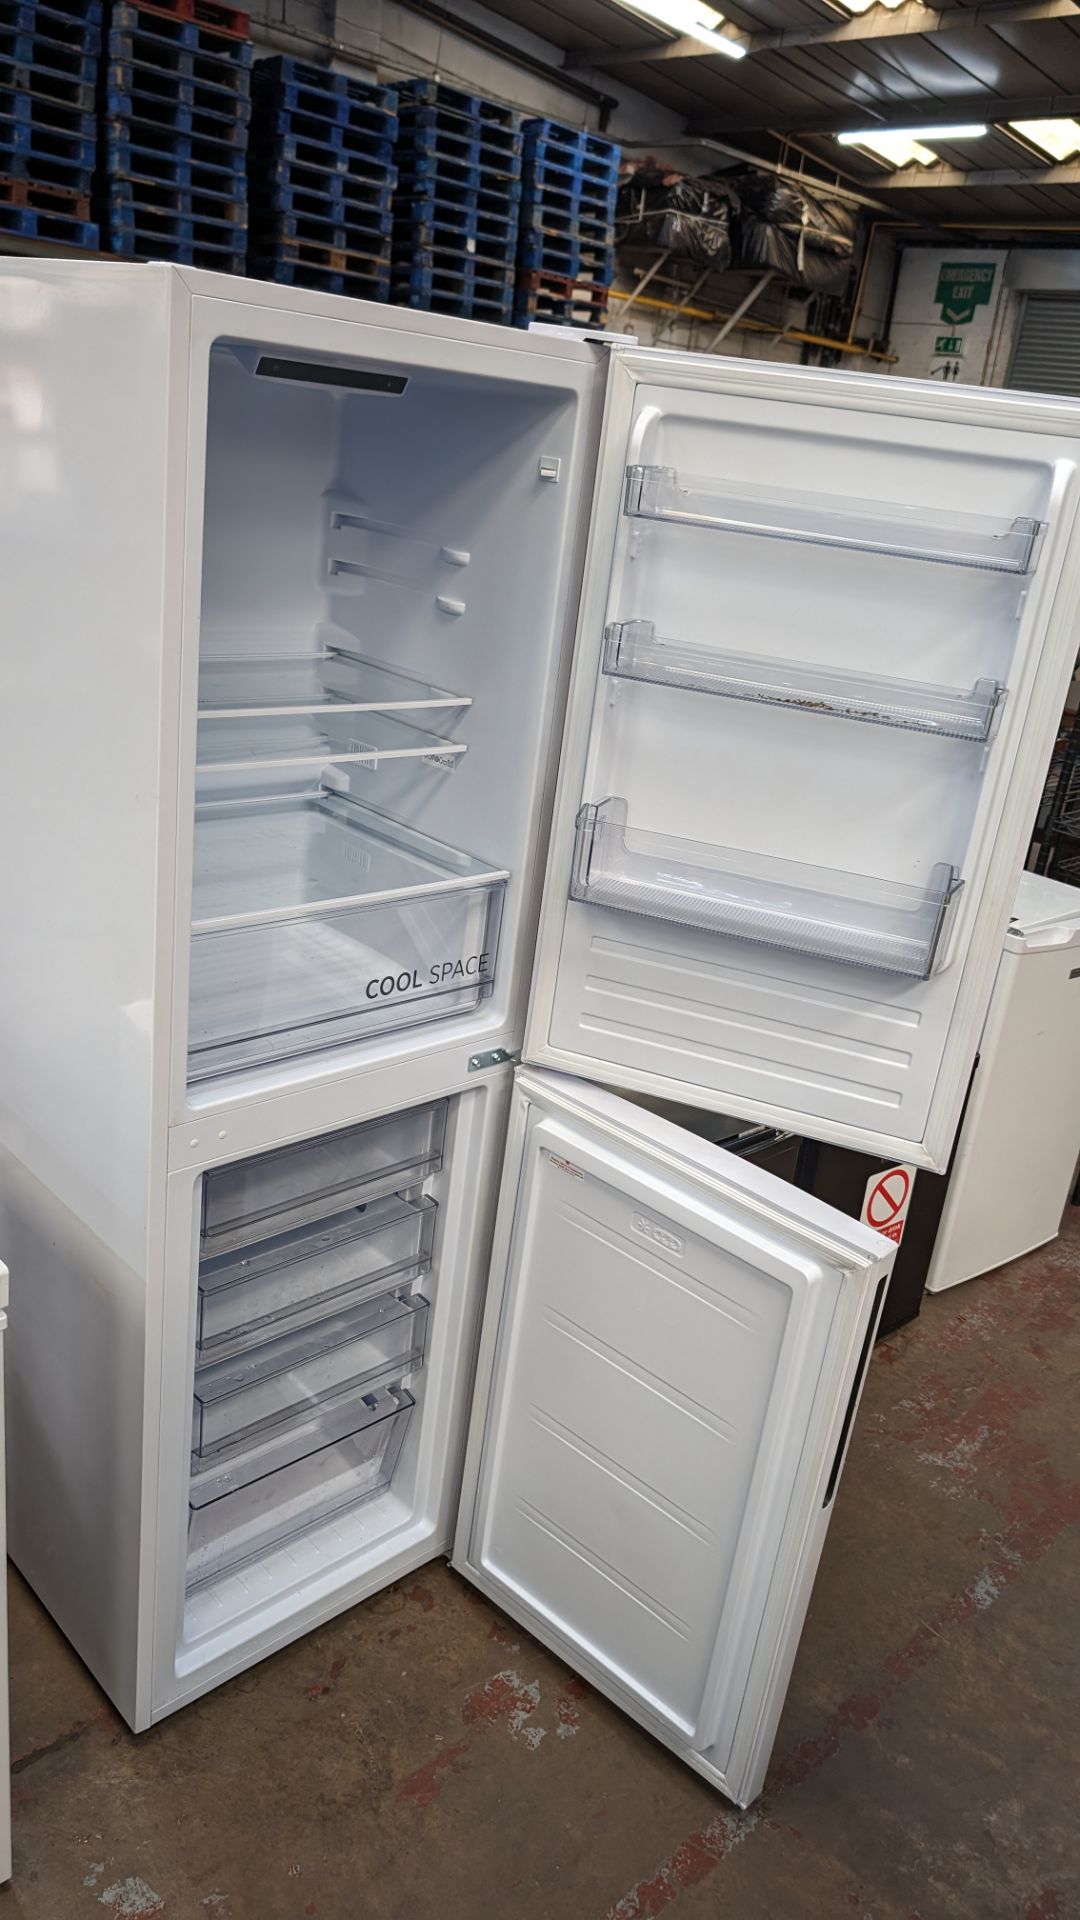 Hoover tall domestic fridge freezer - Image 4 of 4